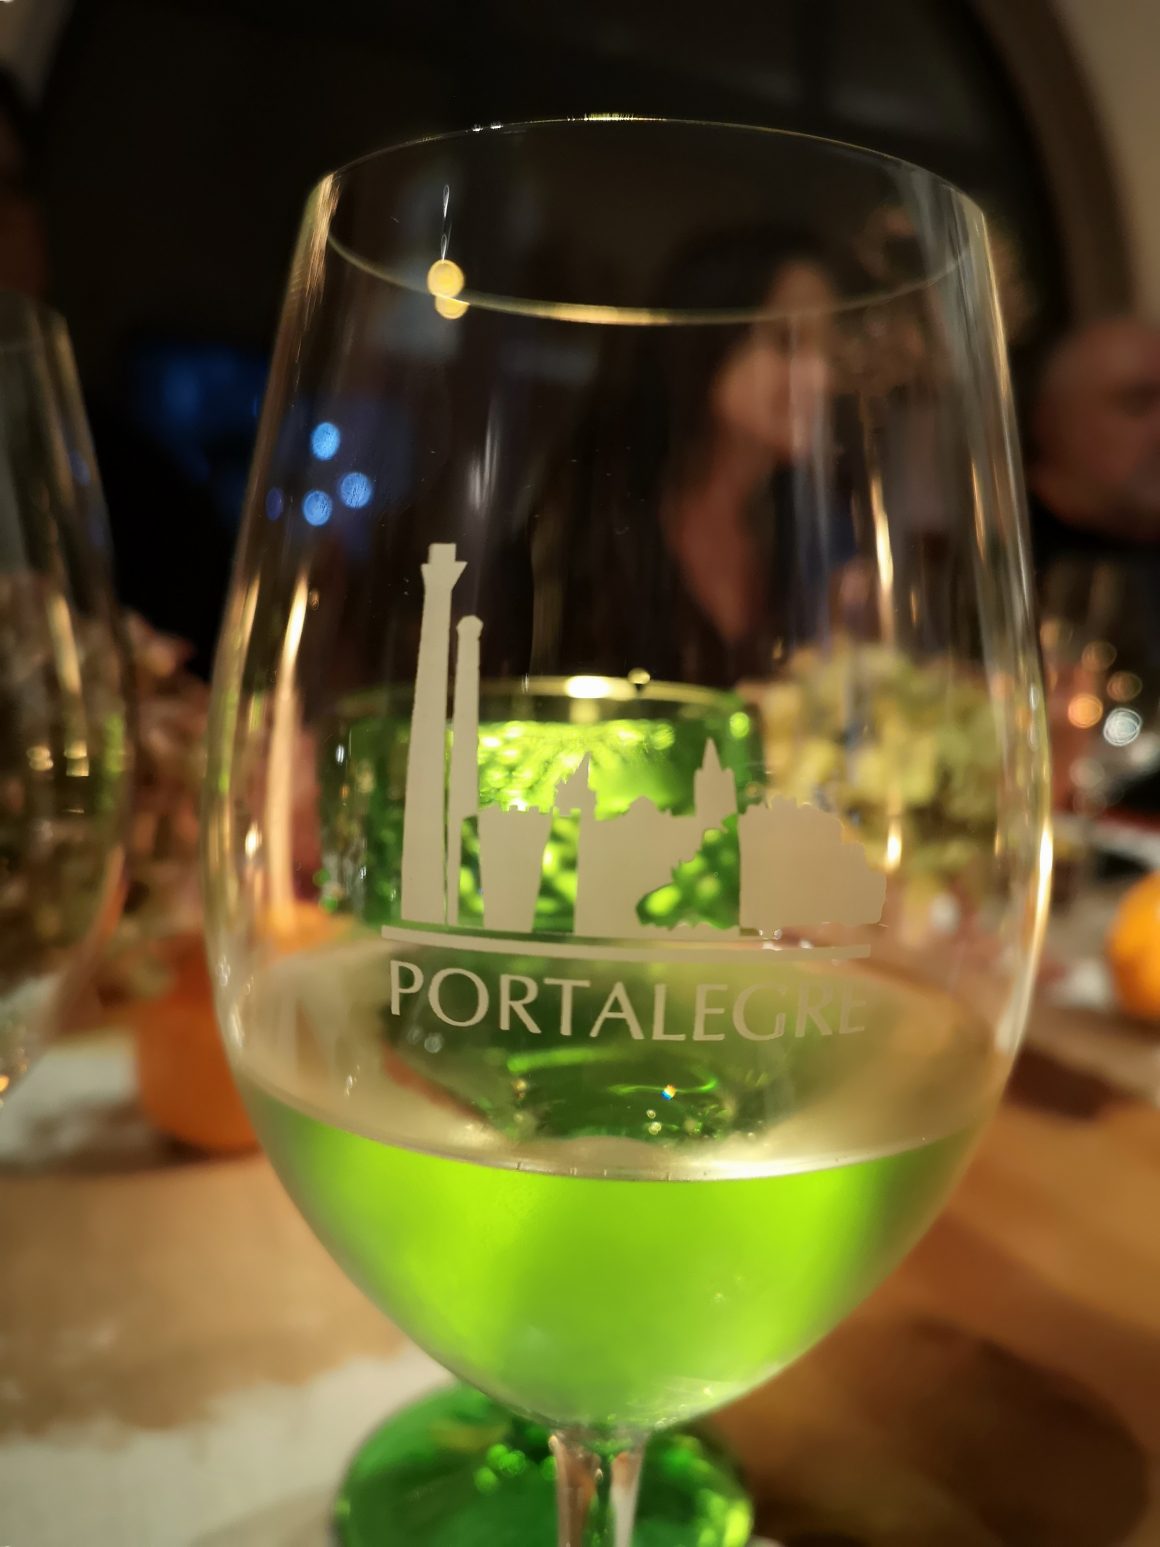 Portalegre - Viva o Vinho